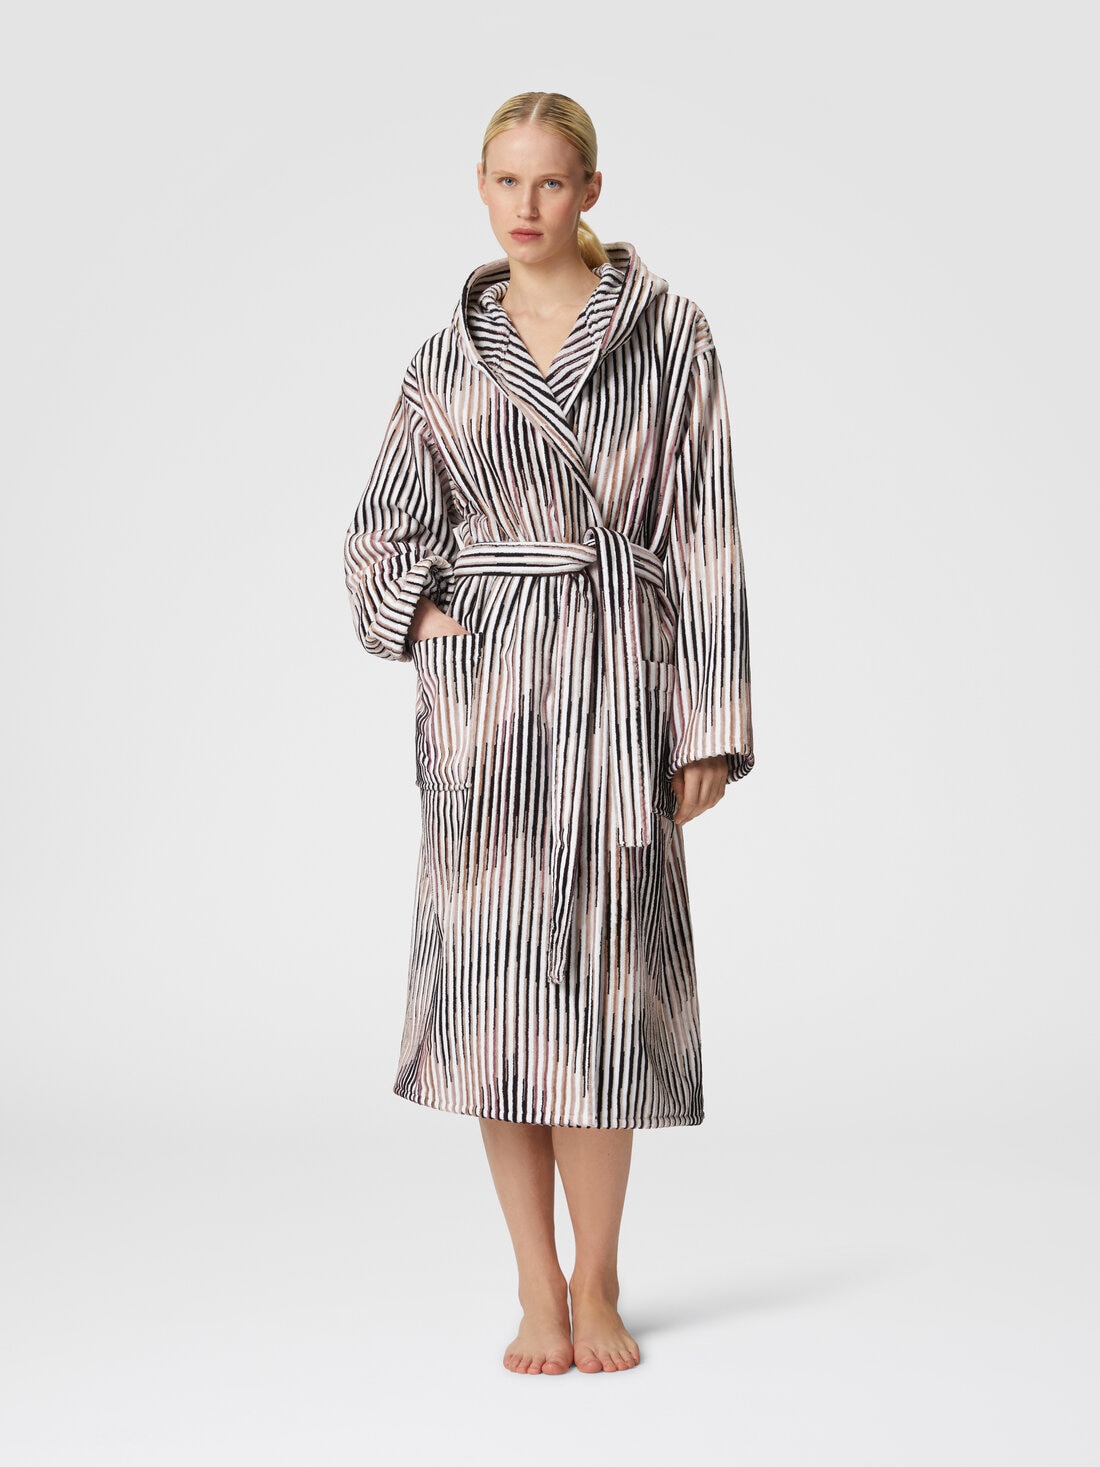 Arpeggio bathrobe in slub cotton terry, Brown - 1D3AC99707381 - 1